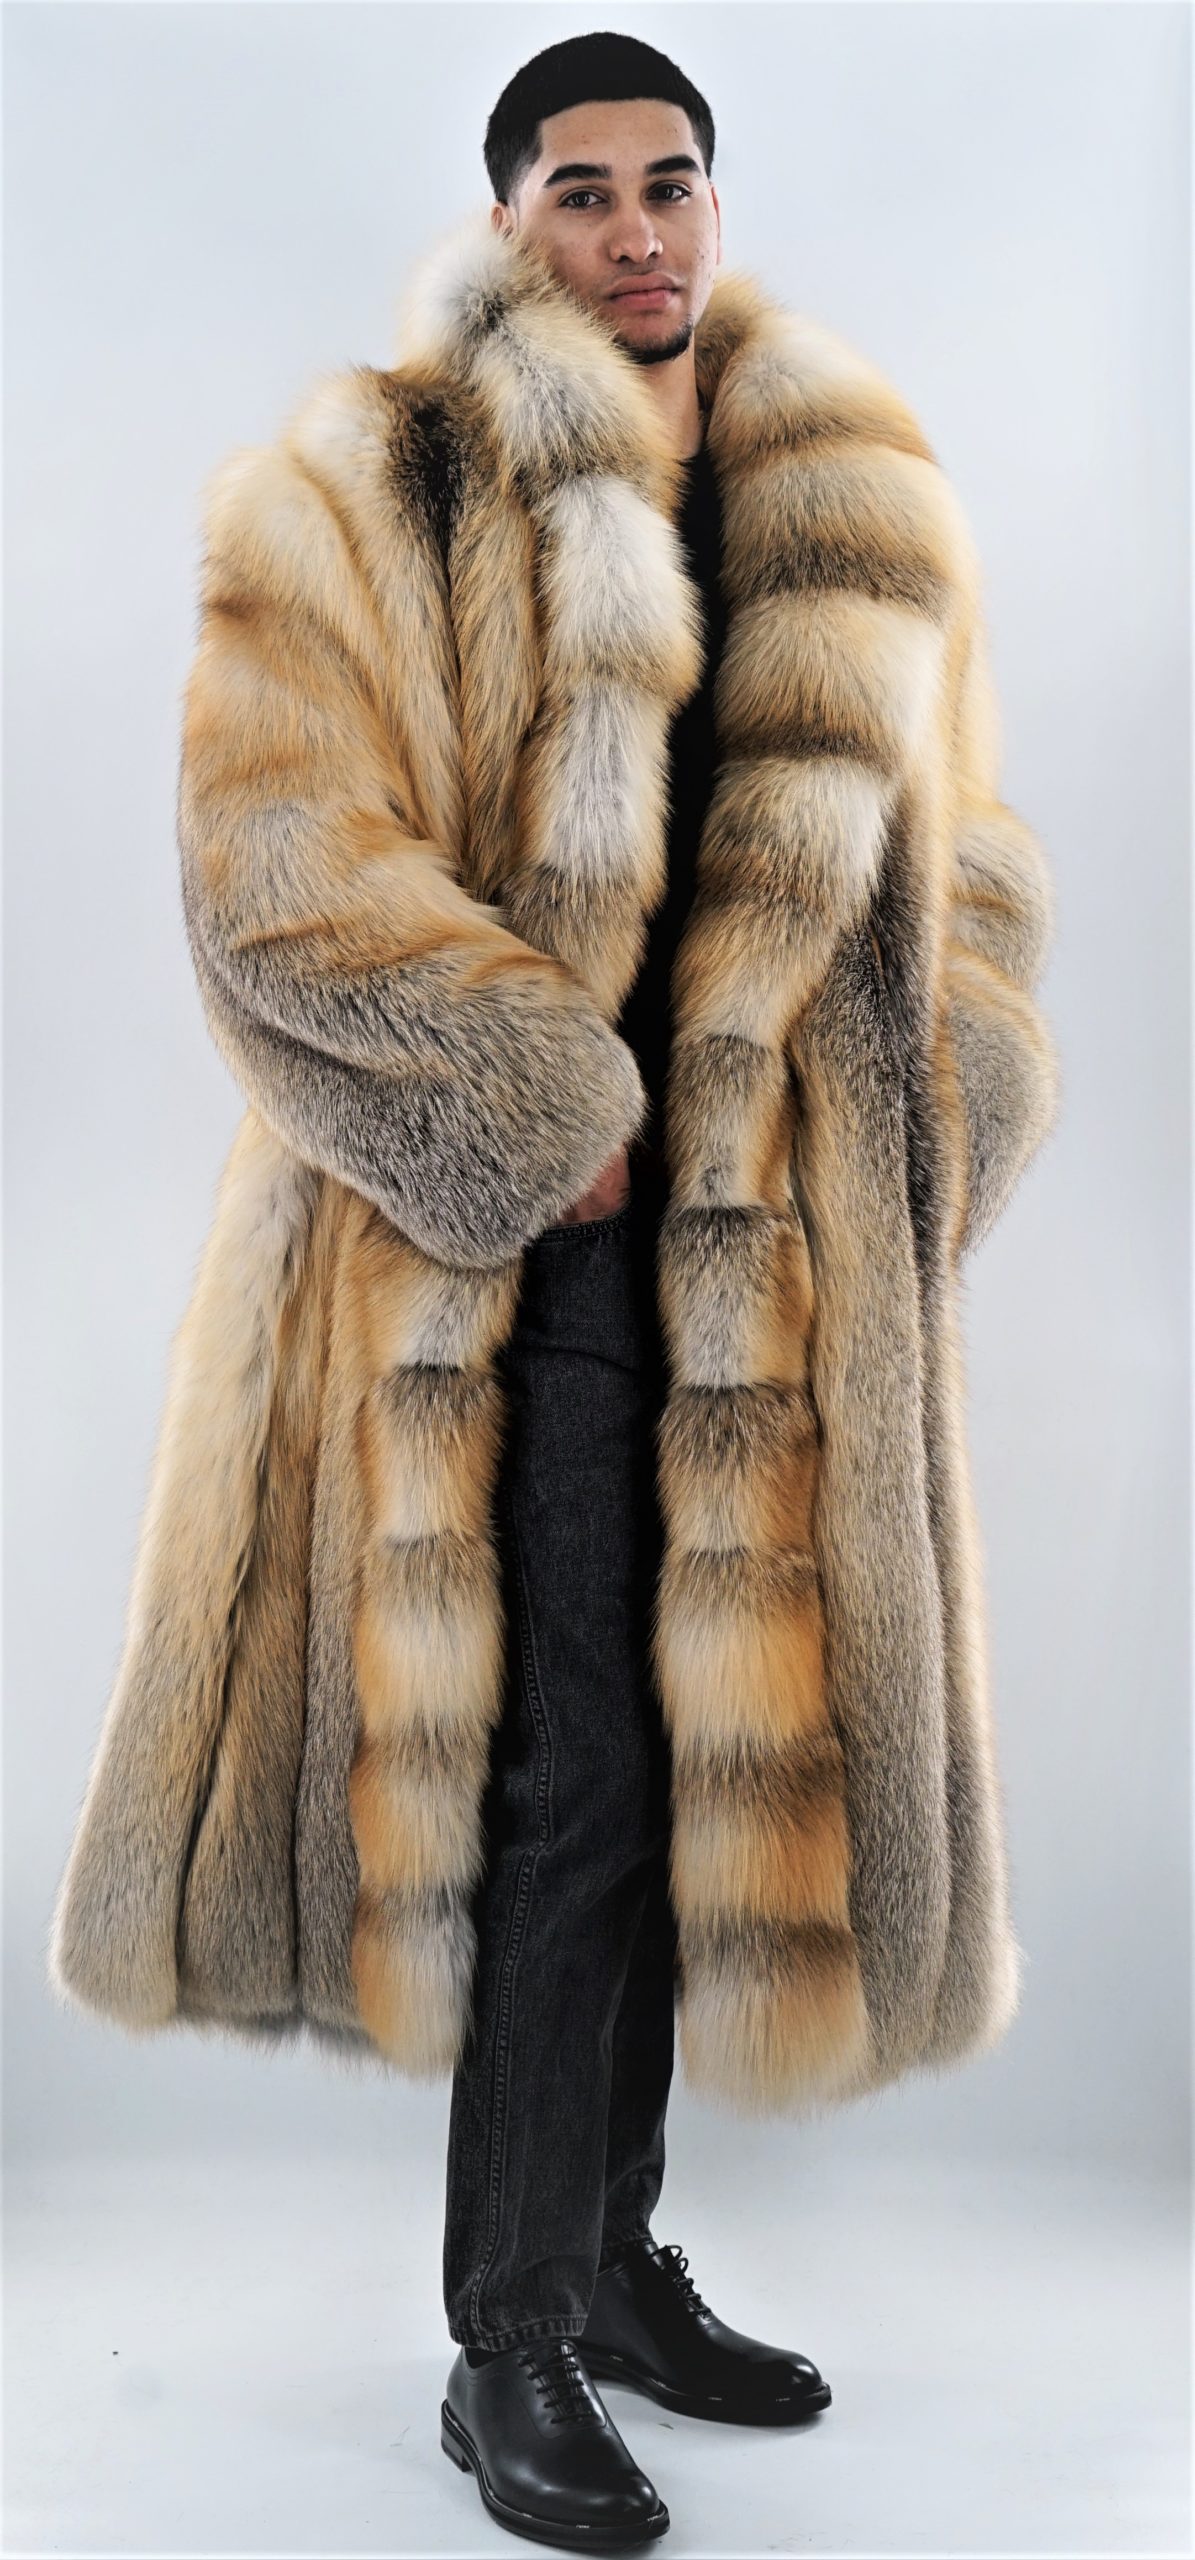 Authentic fur coats in Elegant Navy shade for Men-thanhphatduhoc.com.vn